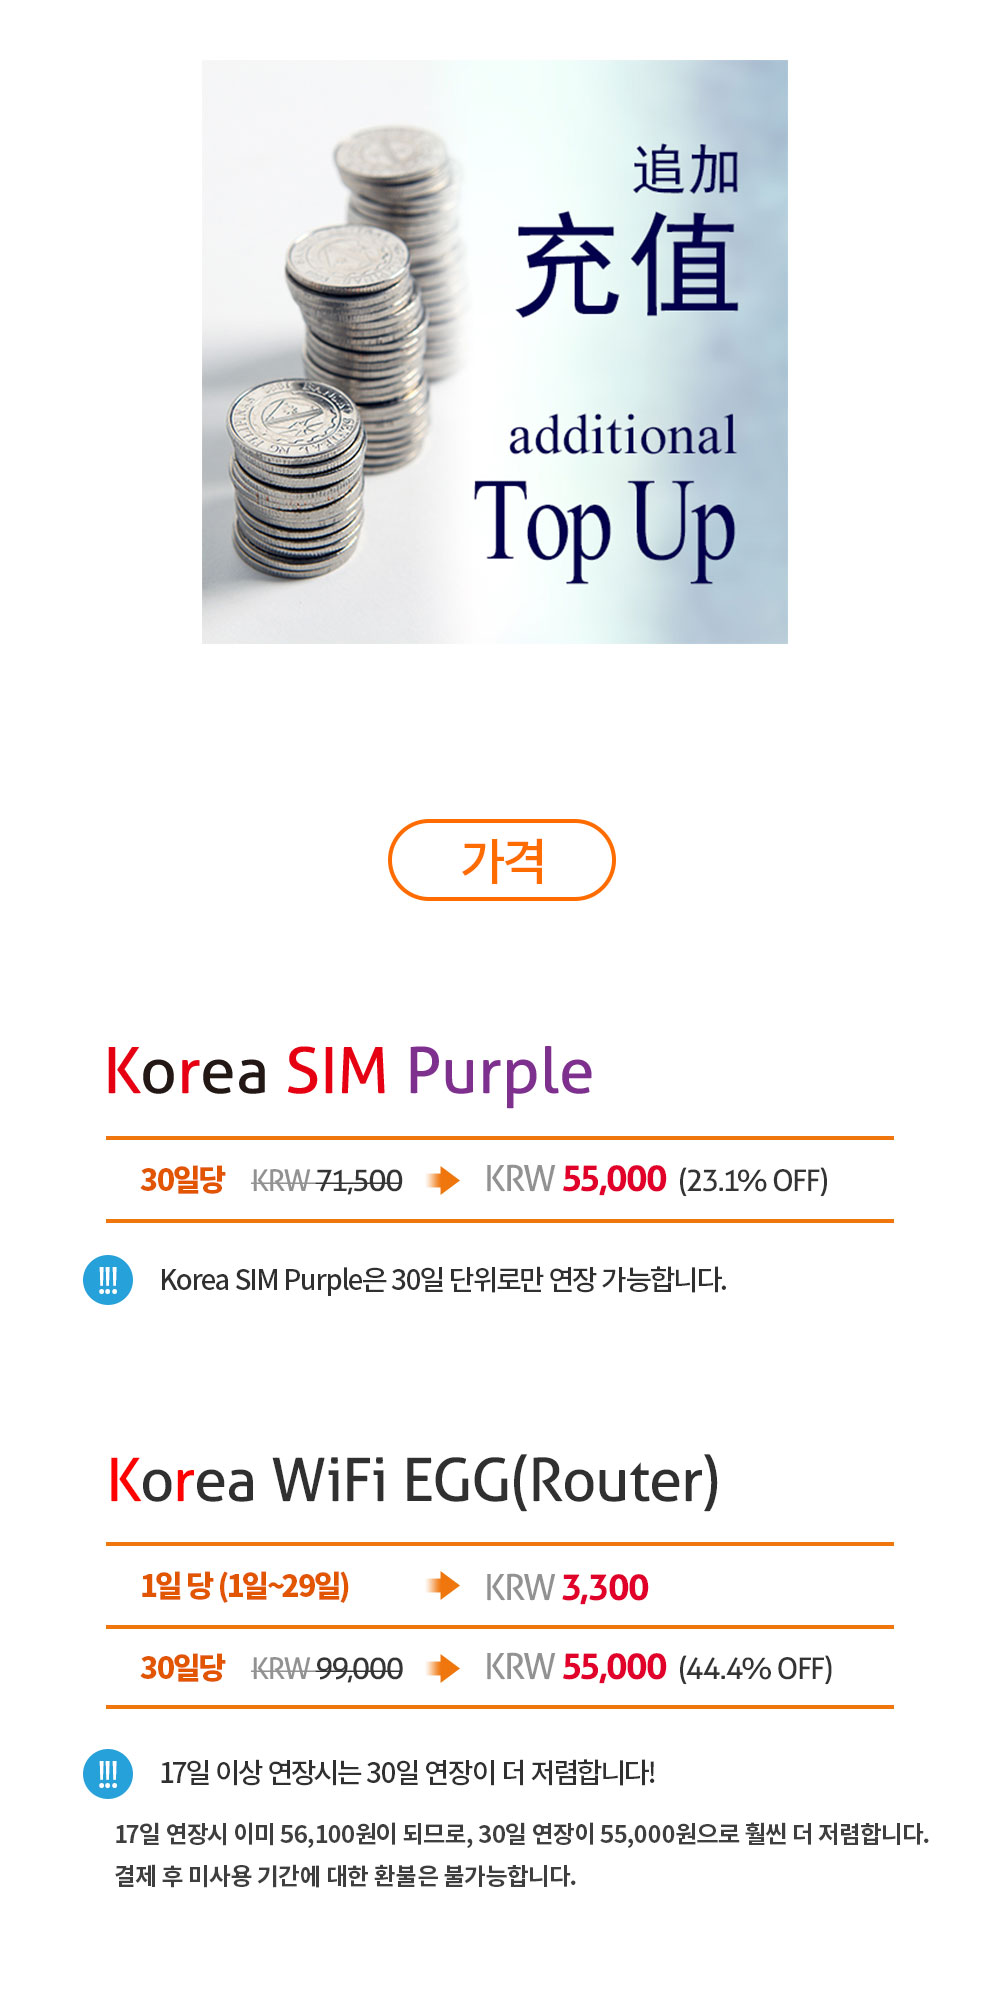 Korea SIM Purple & WiFi Egg(Router) Extend Period